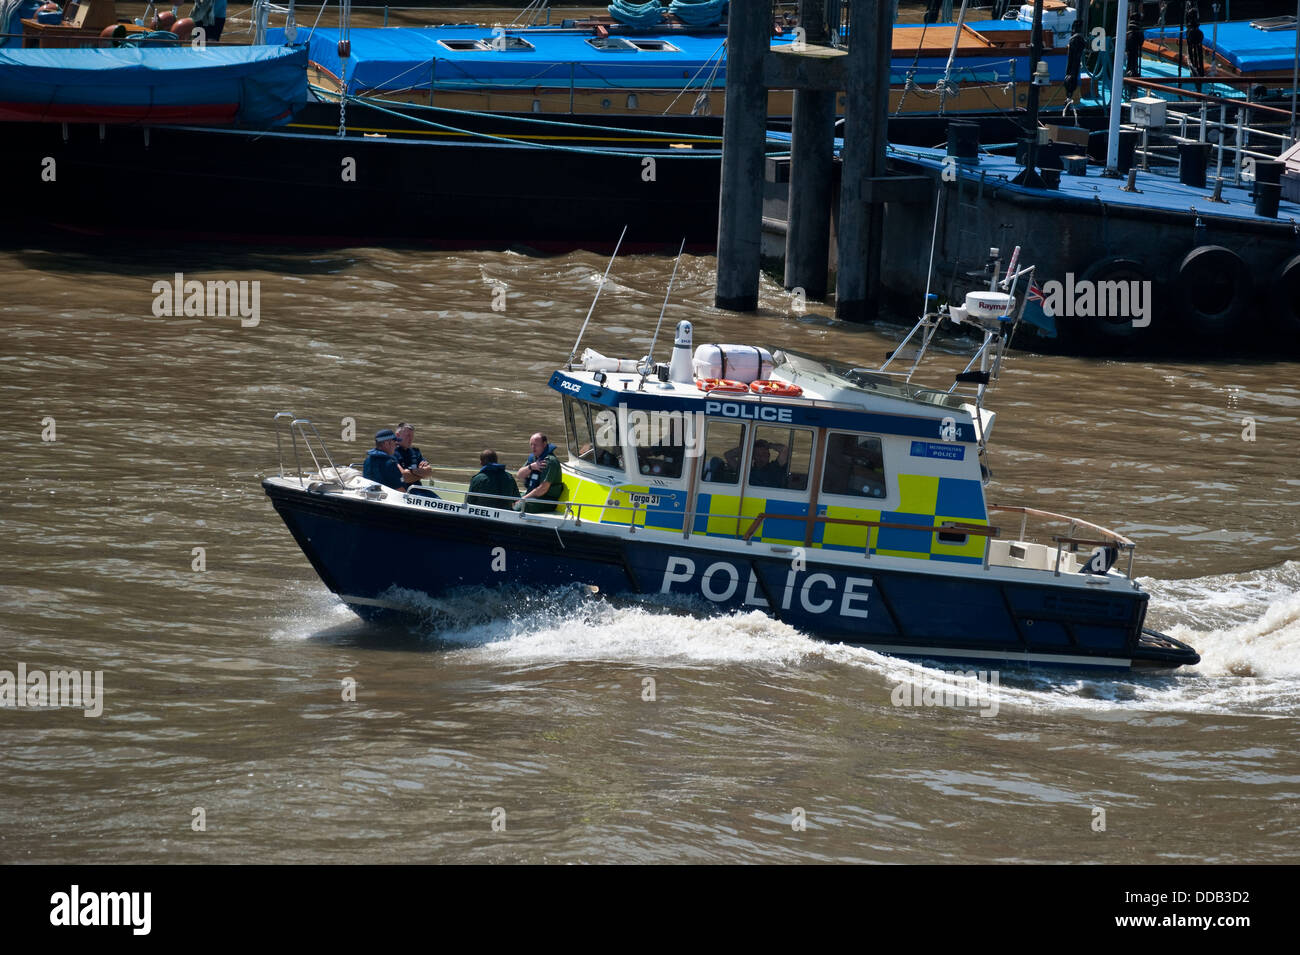 La barca di polizia "Robert Peel II' sul Fiume Tamigi, Londra. Foto Stock